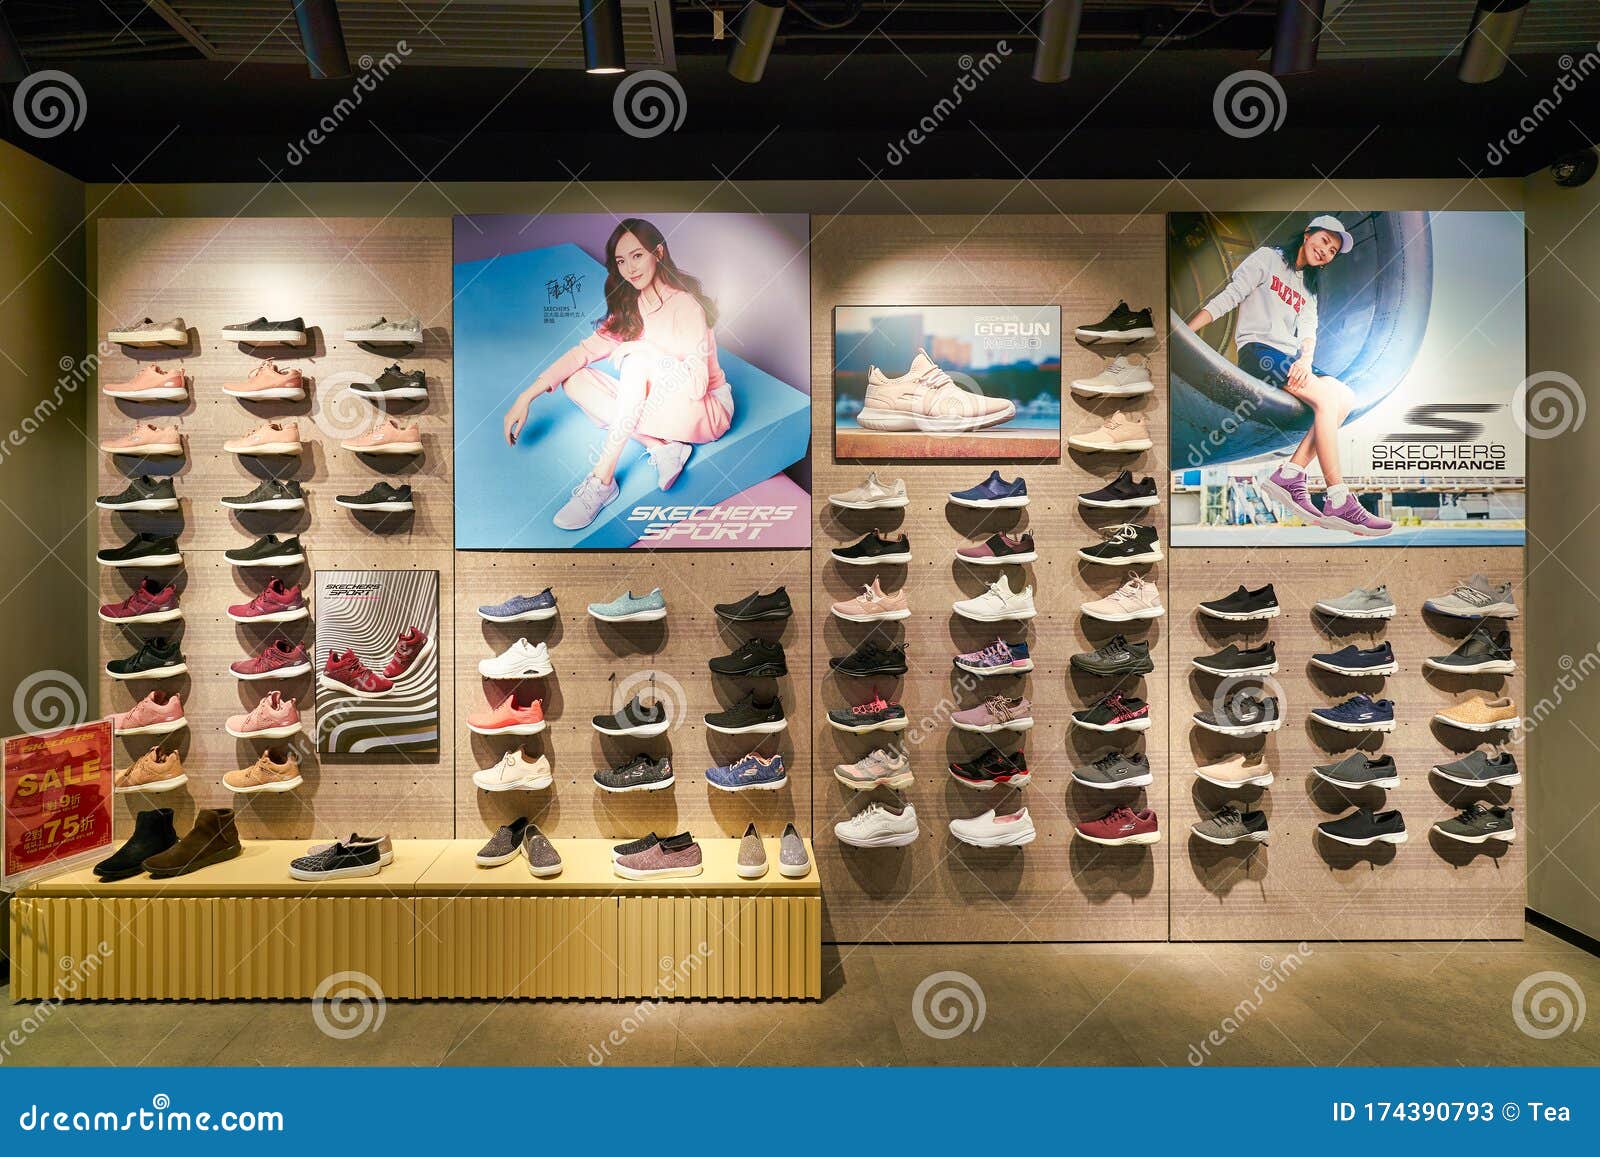 Skechers store editorial stock photo 